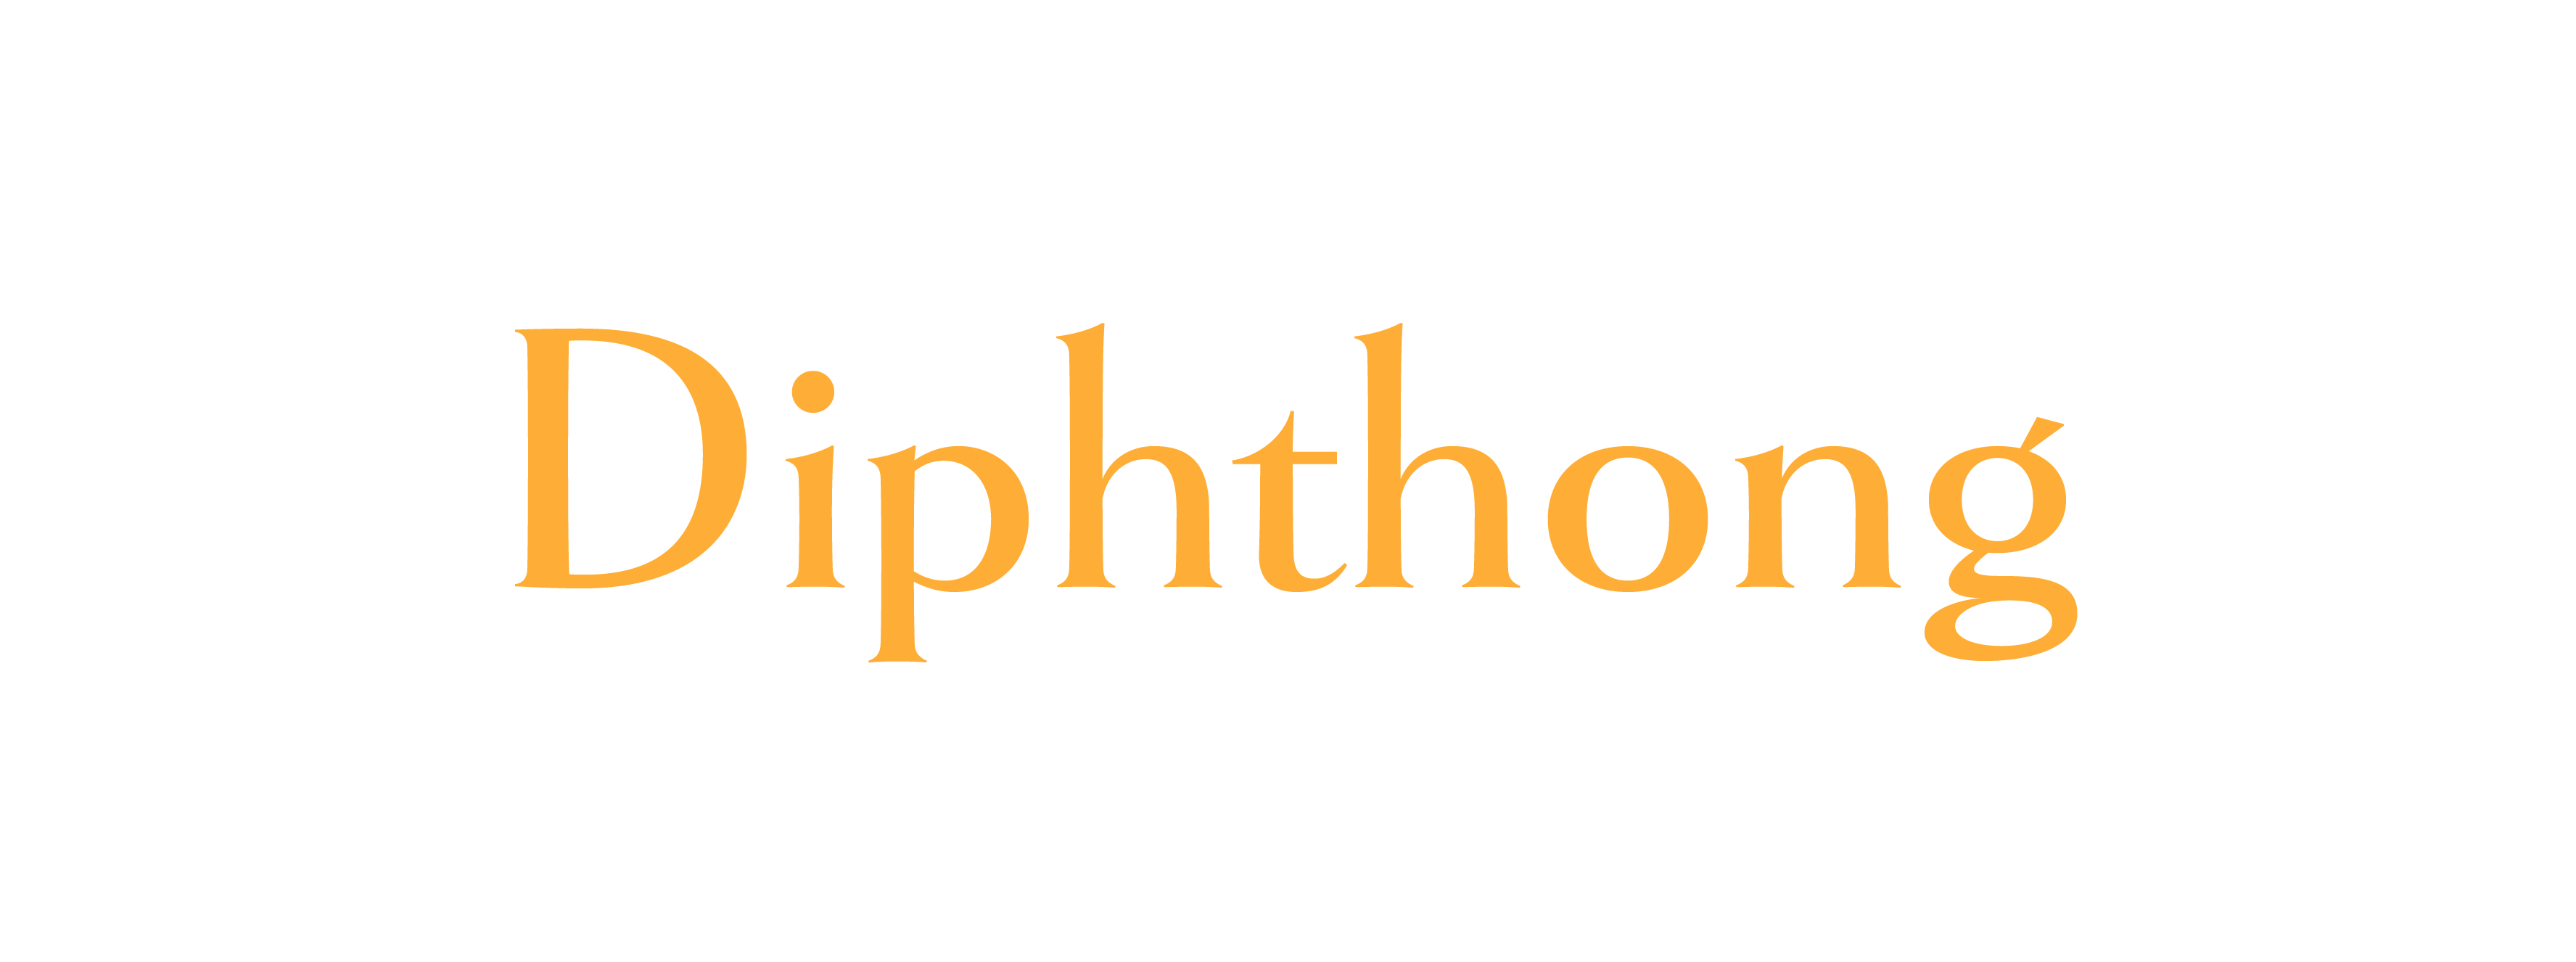 Diphthong - Word Daily